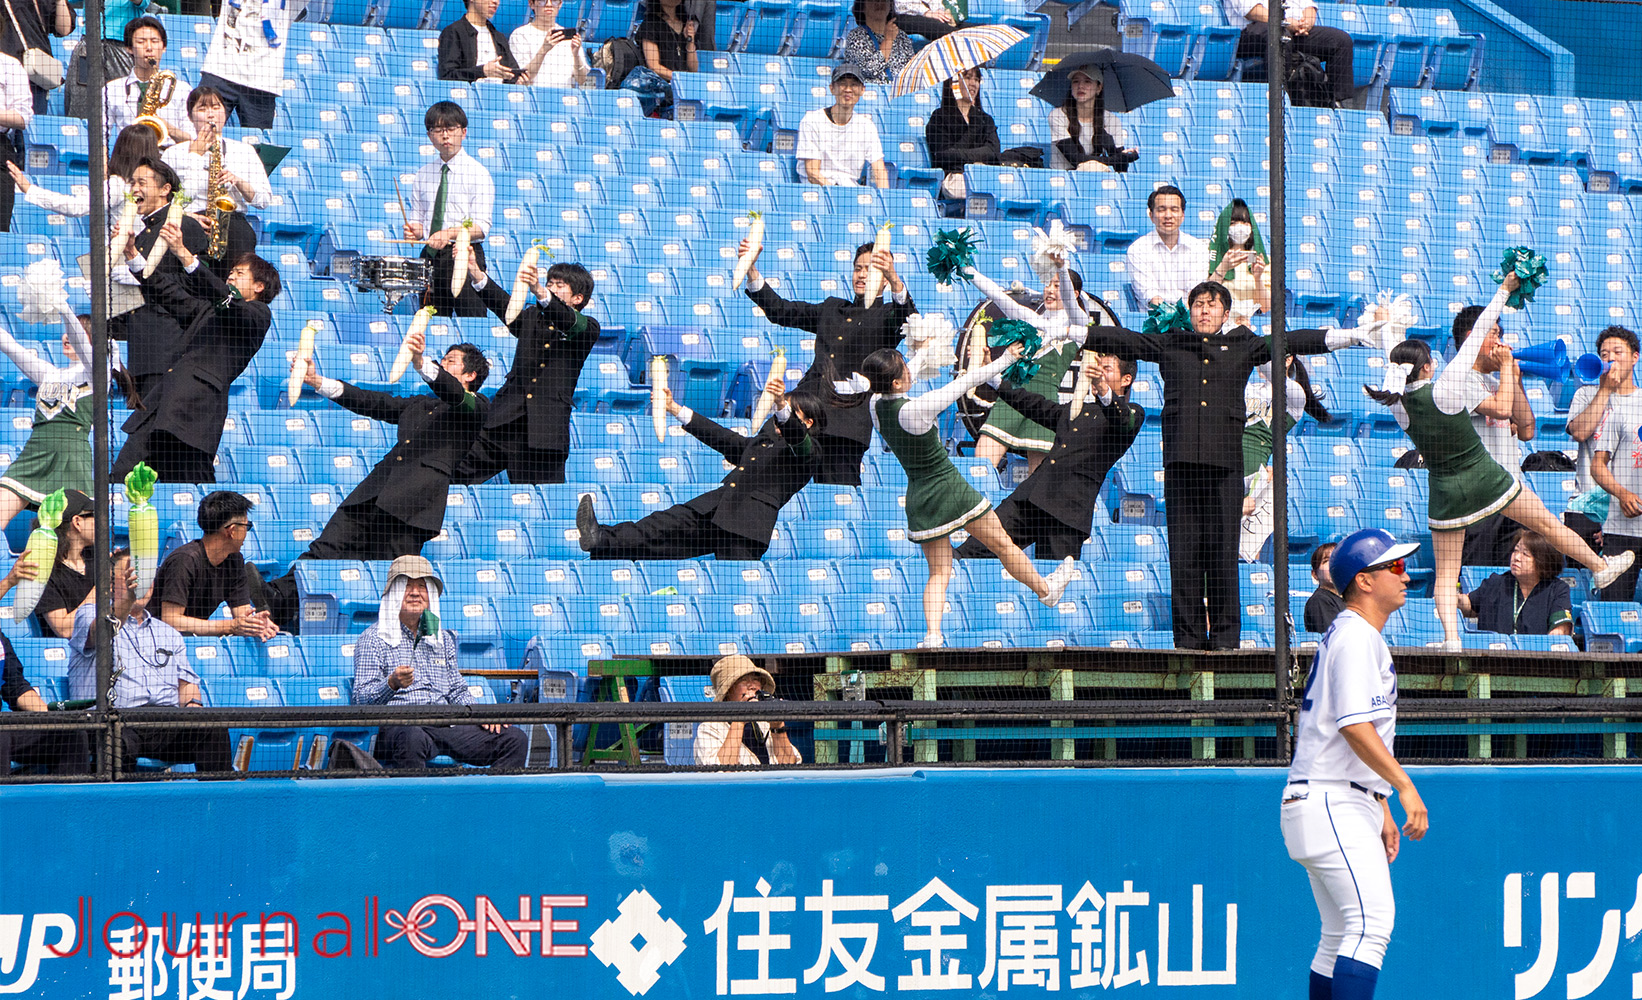 Journal-ONE | 第73回全日本大学野球選手権 天理大戦の1回に先制点をあげた東京農業大学北海道オホーツクの応援団は”大根踊り”の演舞で盛り上がる